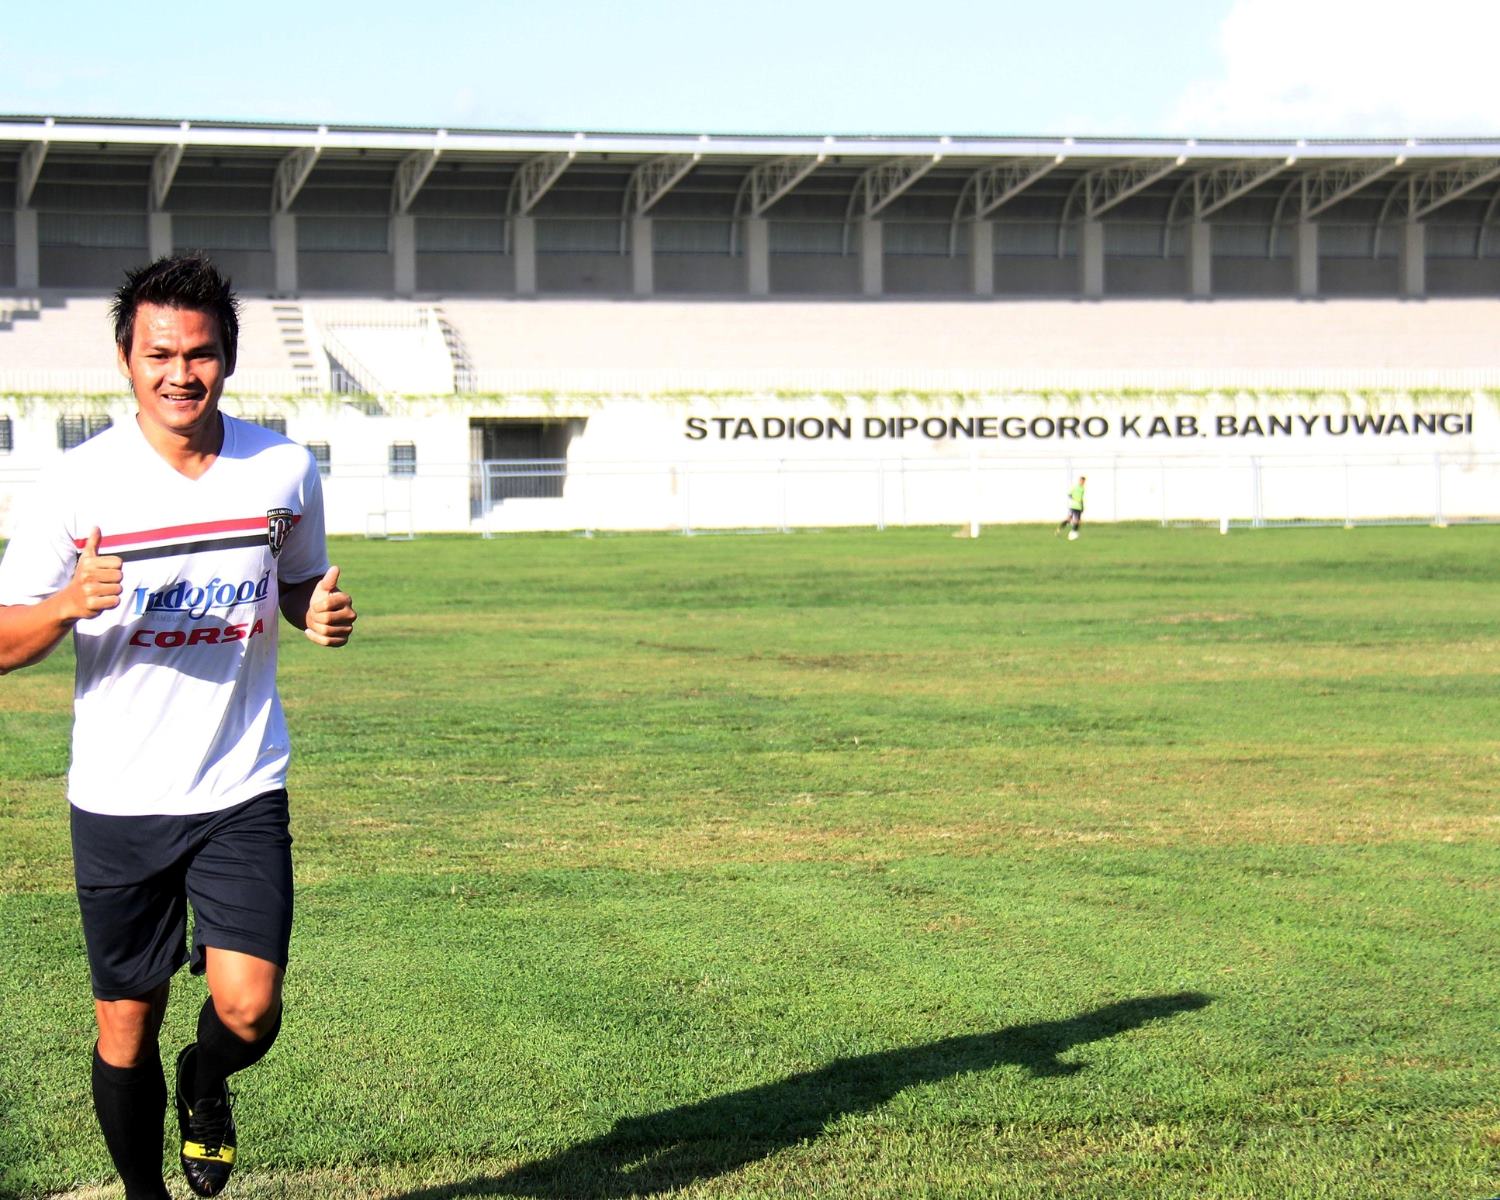 8-astounding-facts-about-diponegoro-stadium